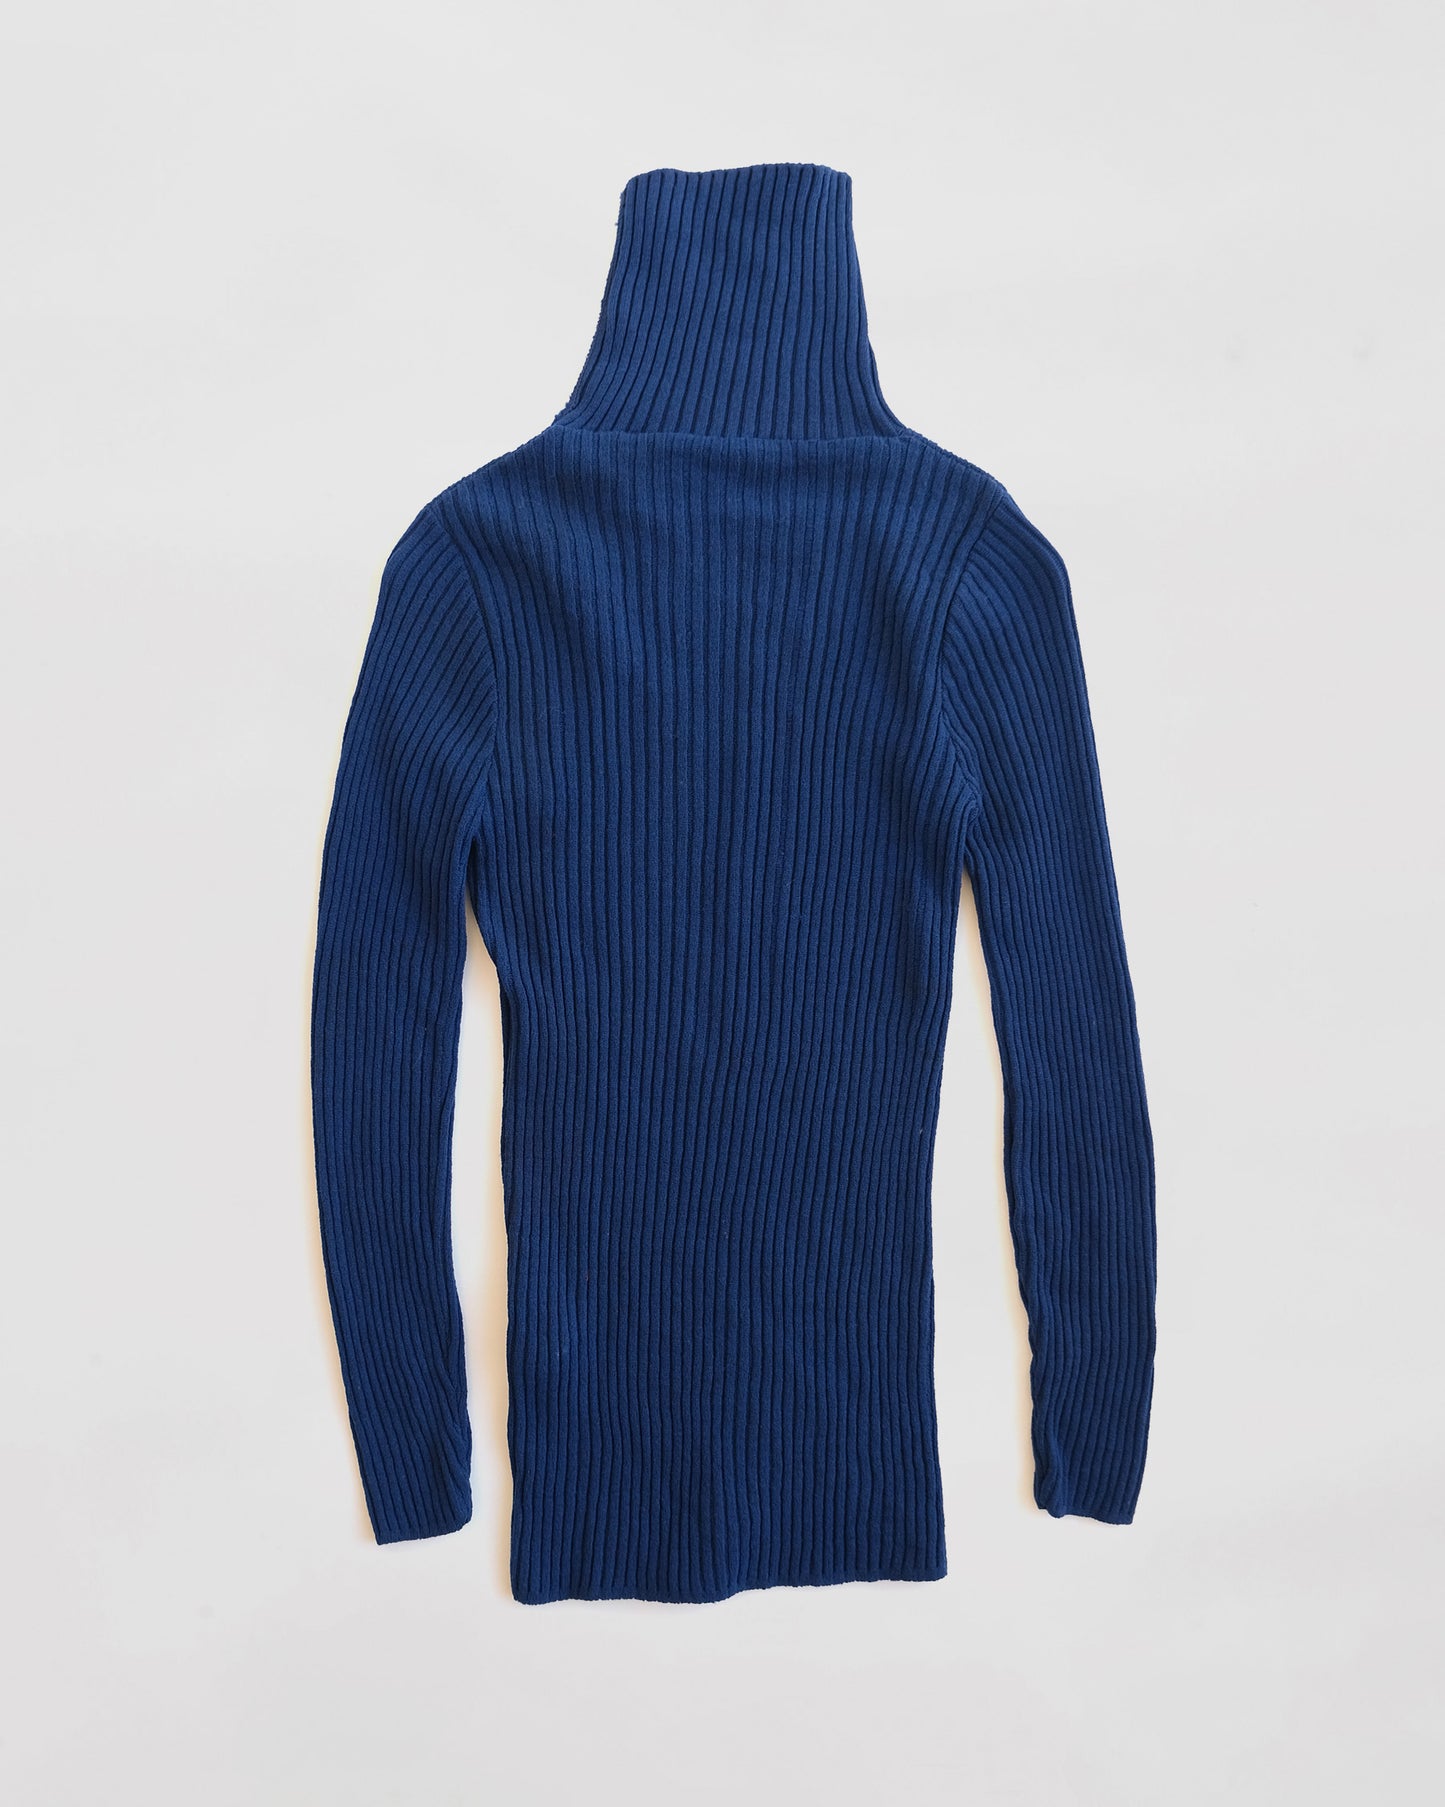 NOS Turtleneck Sweater